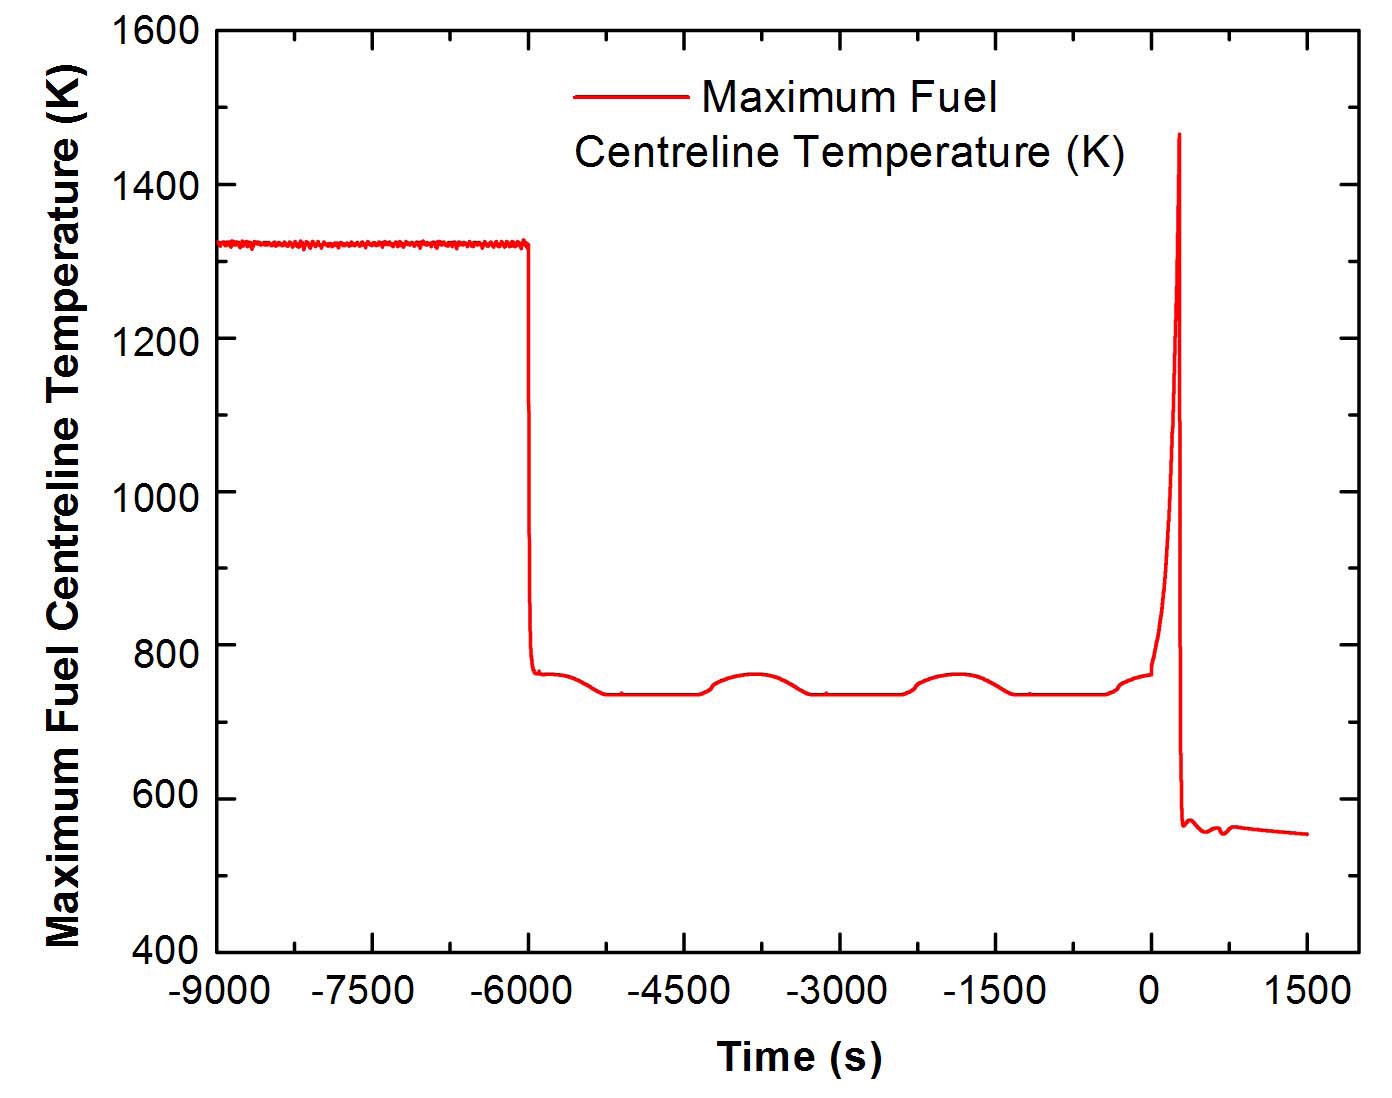 Maximum Fuel Centerline Temperature during Transient for Chernobyl-like Accident